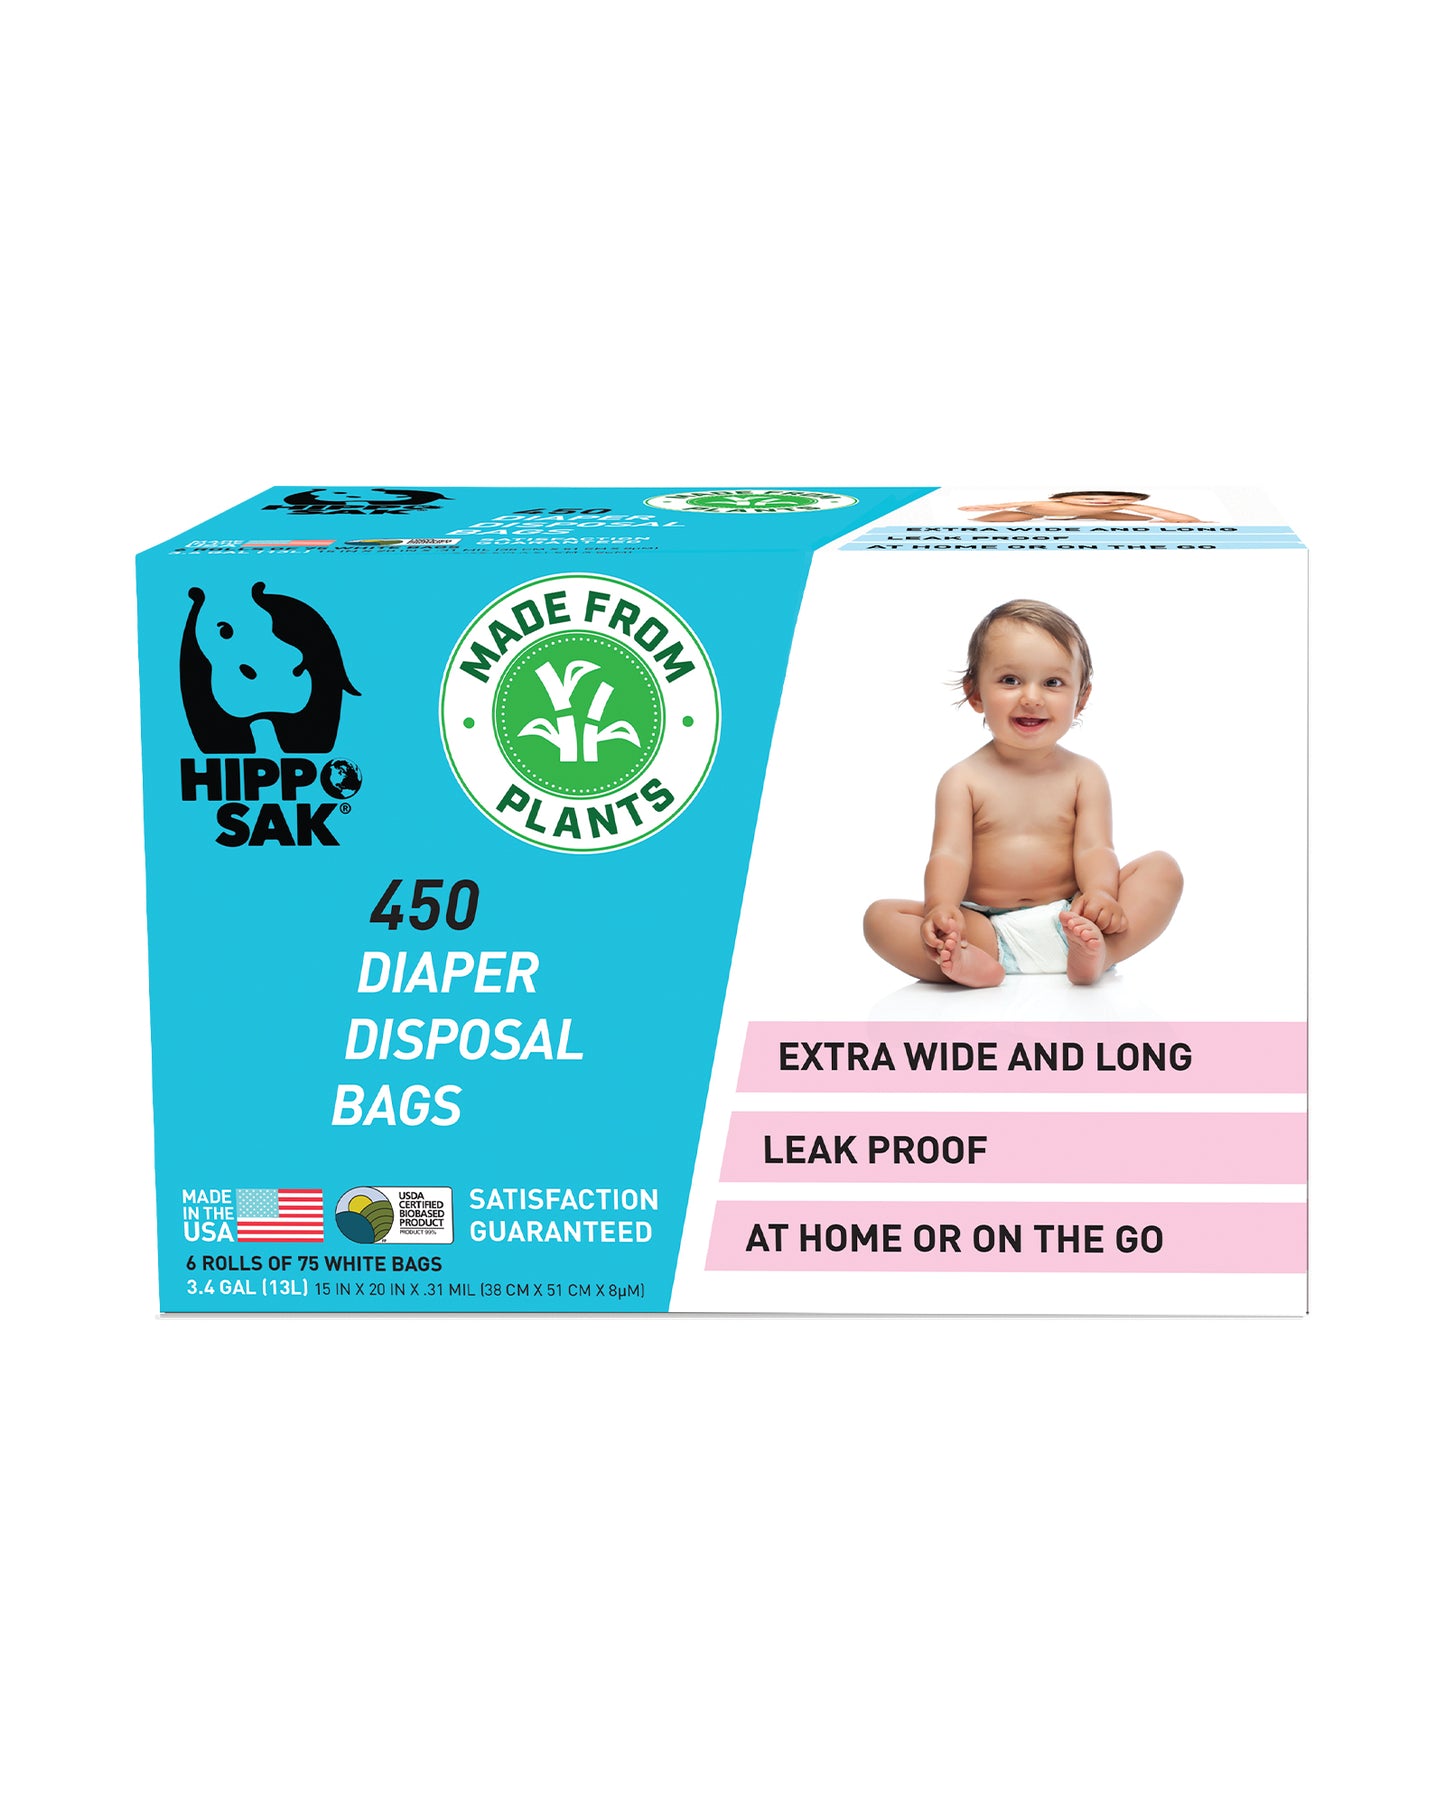 Hippo Sak Plant-Based Diaper Disposal Bags, 450 Count